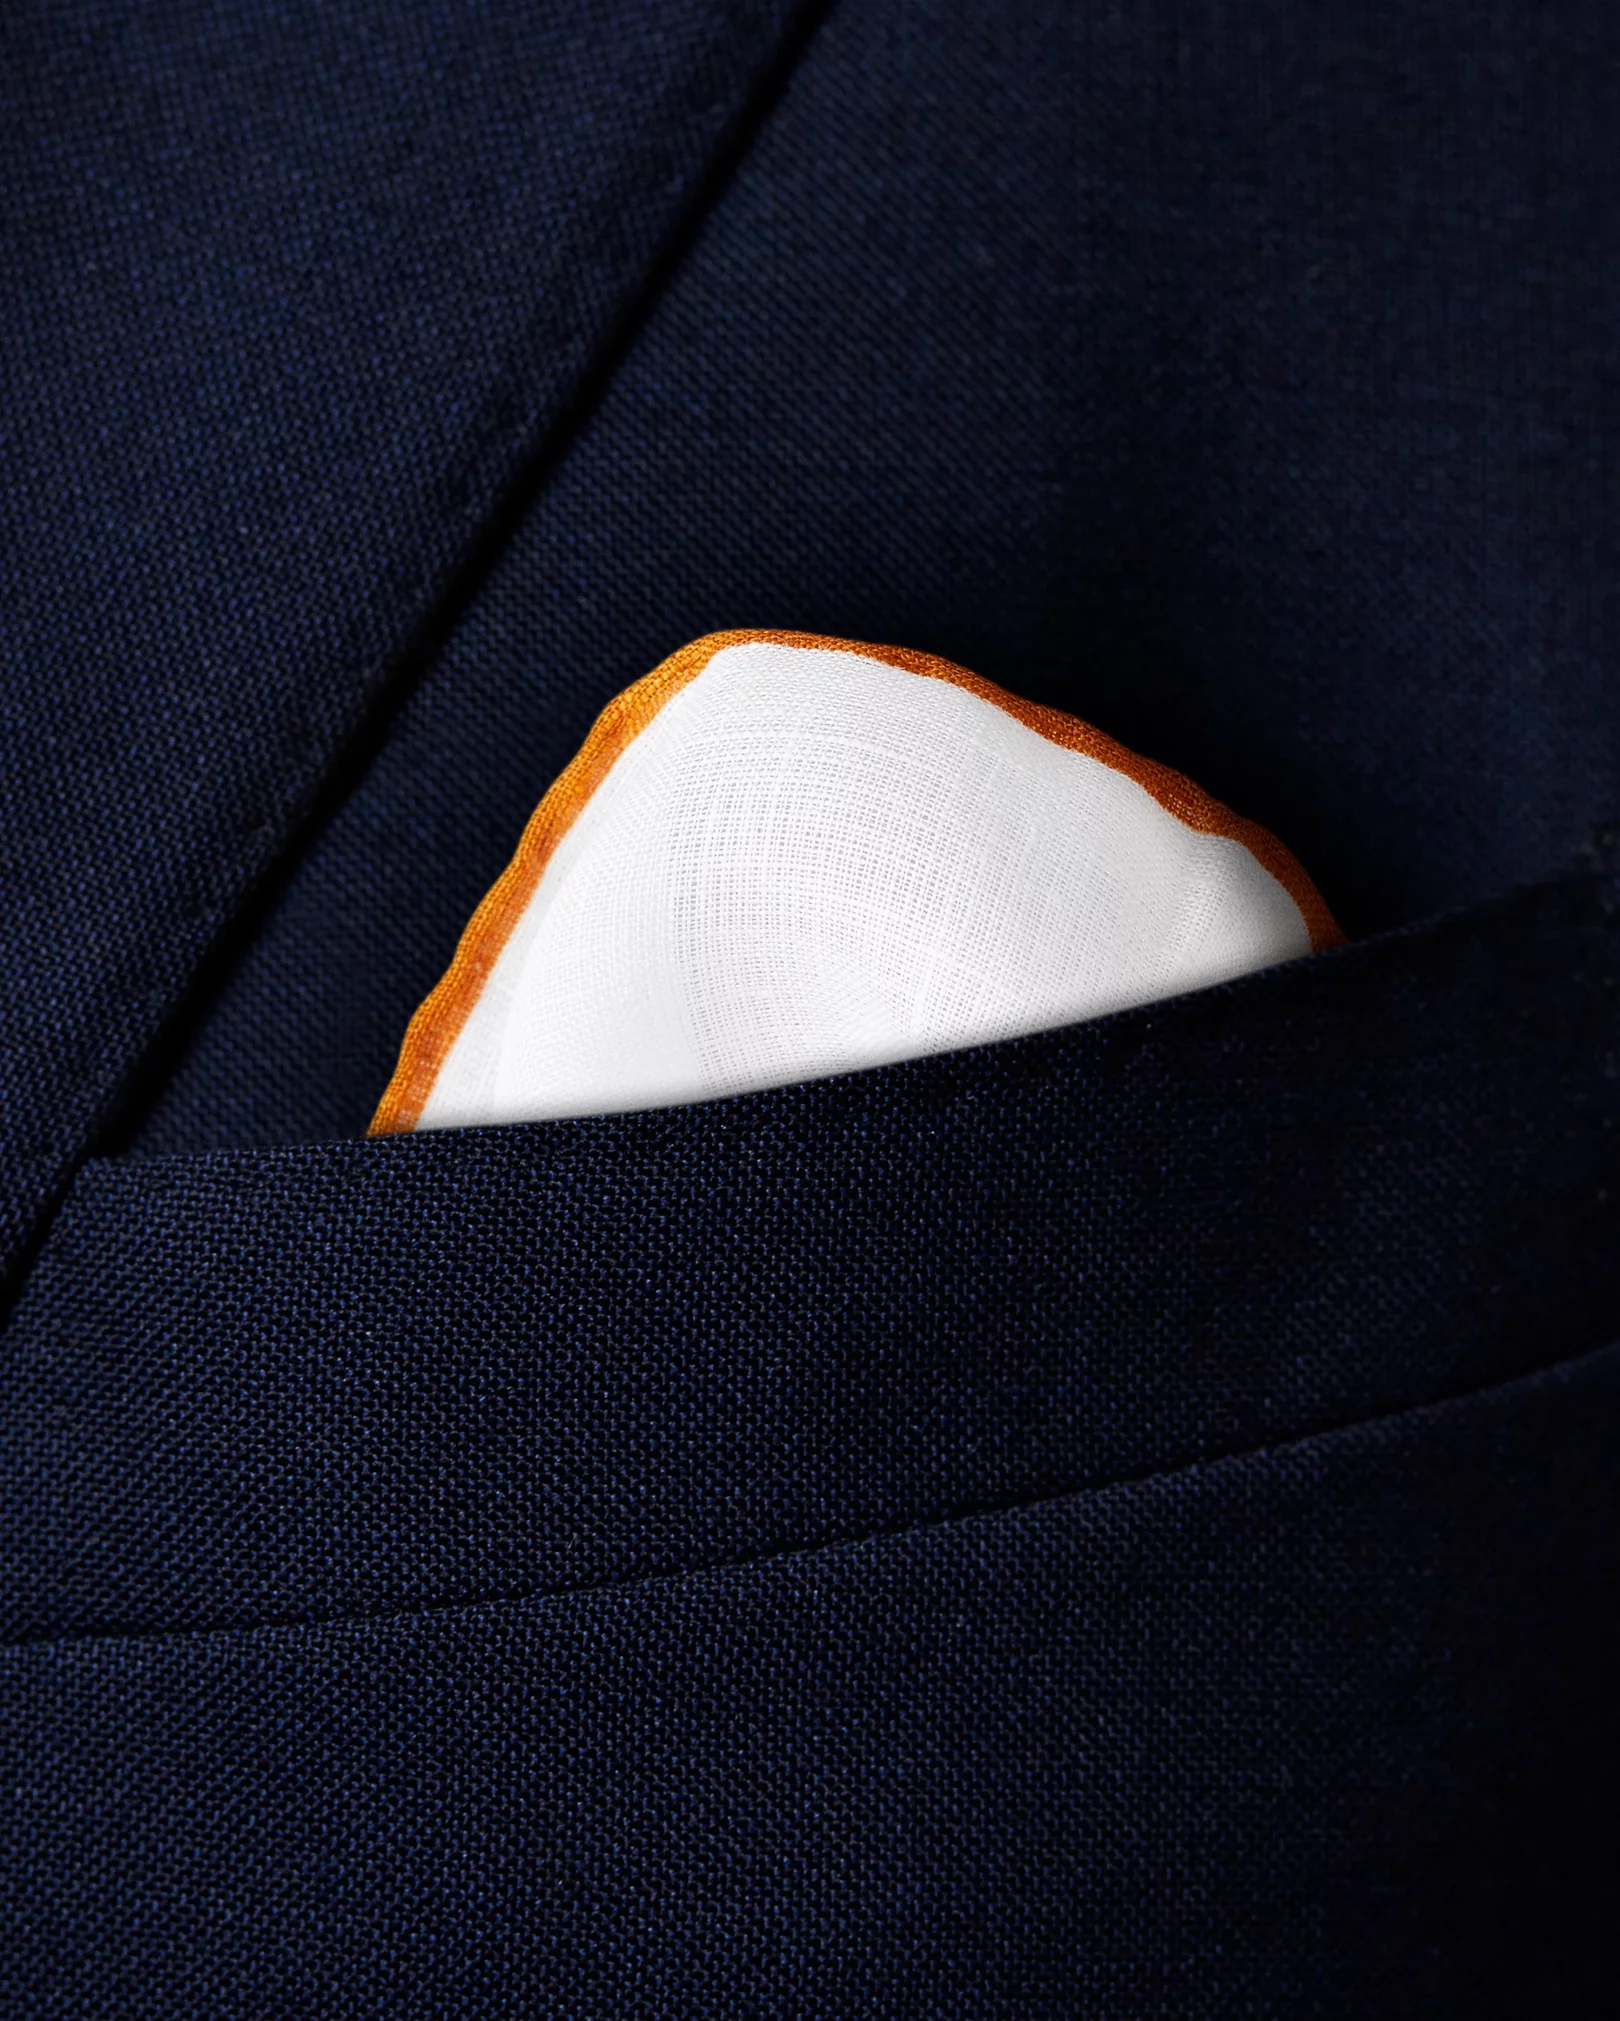 Eton - orange linen pocket square